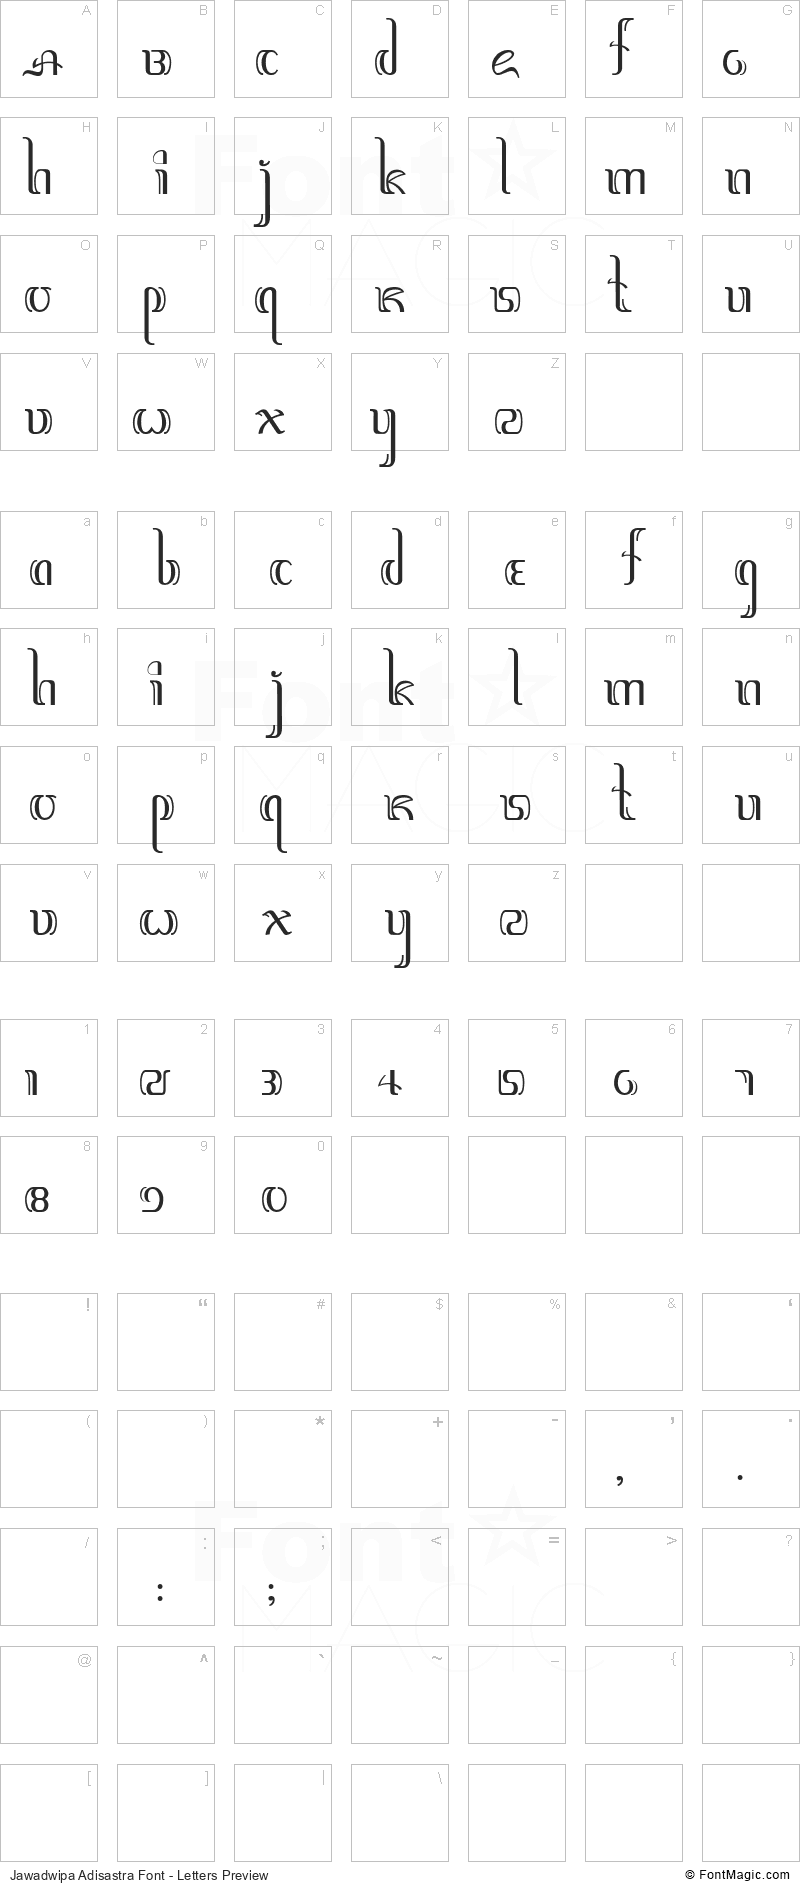 Jawadwipa Adisastra Font - All Latters Preview Chart